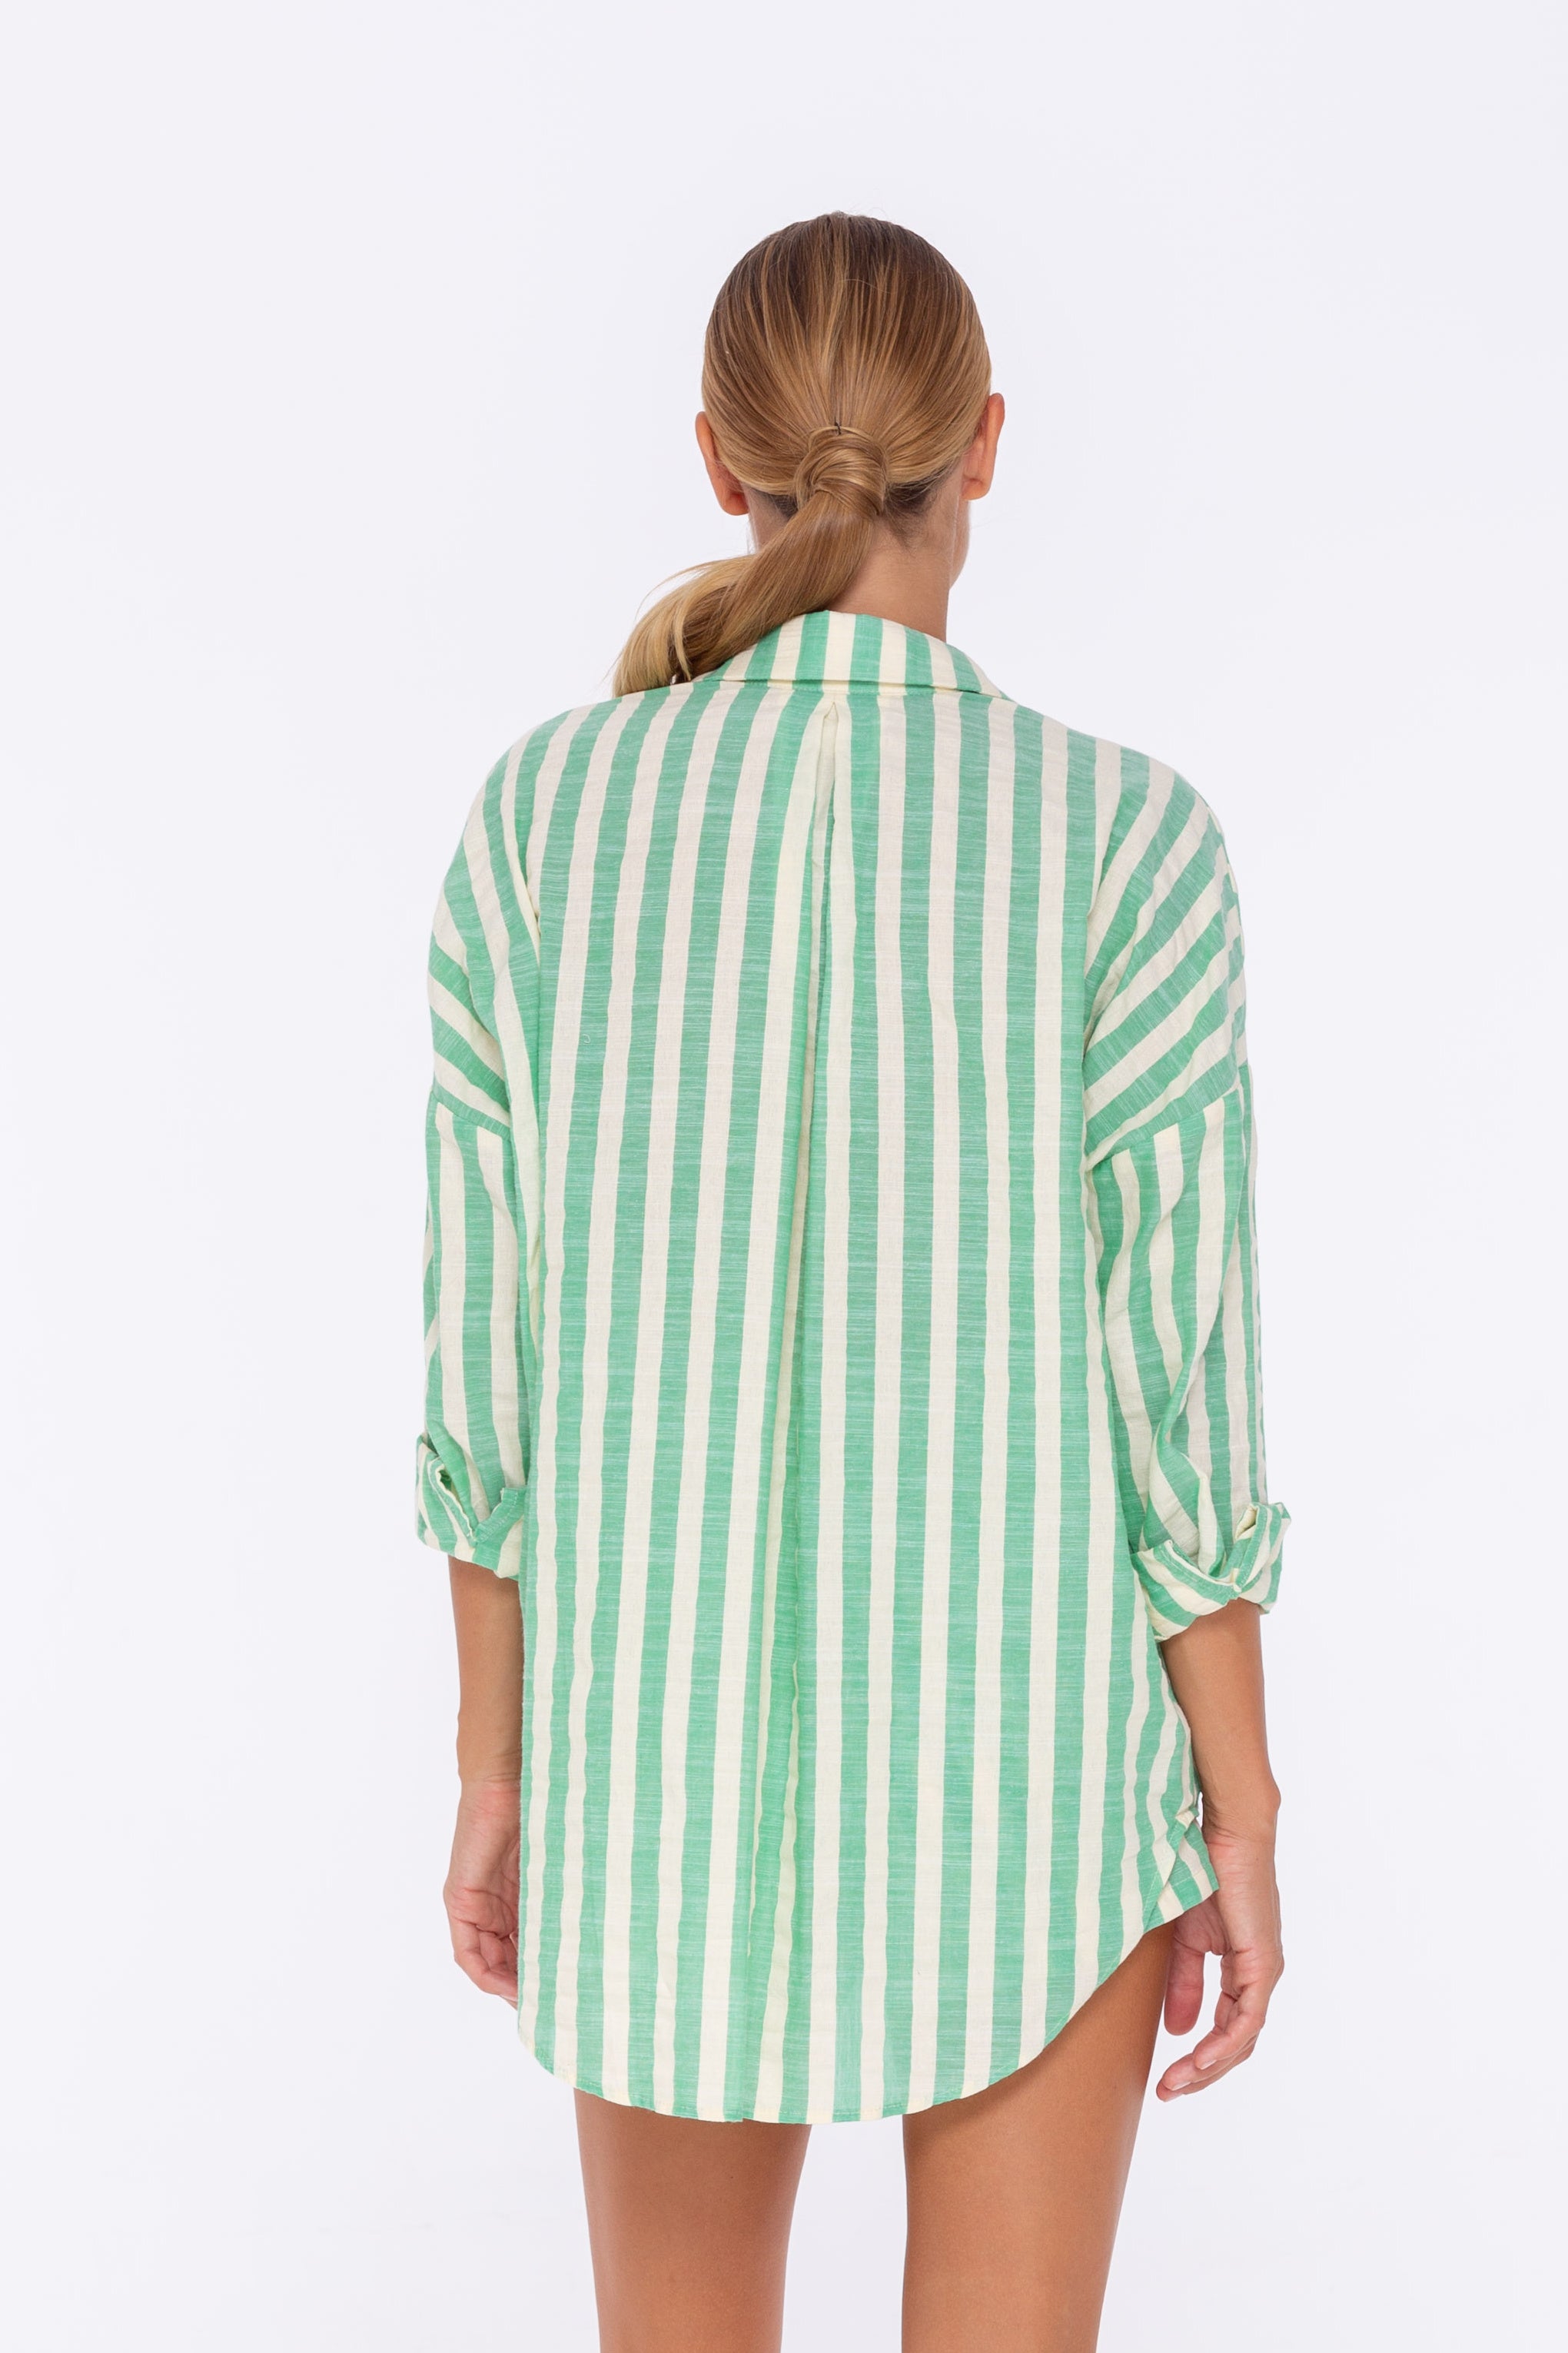 Defiant Shirt - Island Green/Ivory Stripe